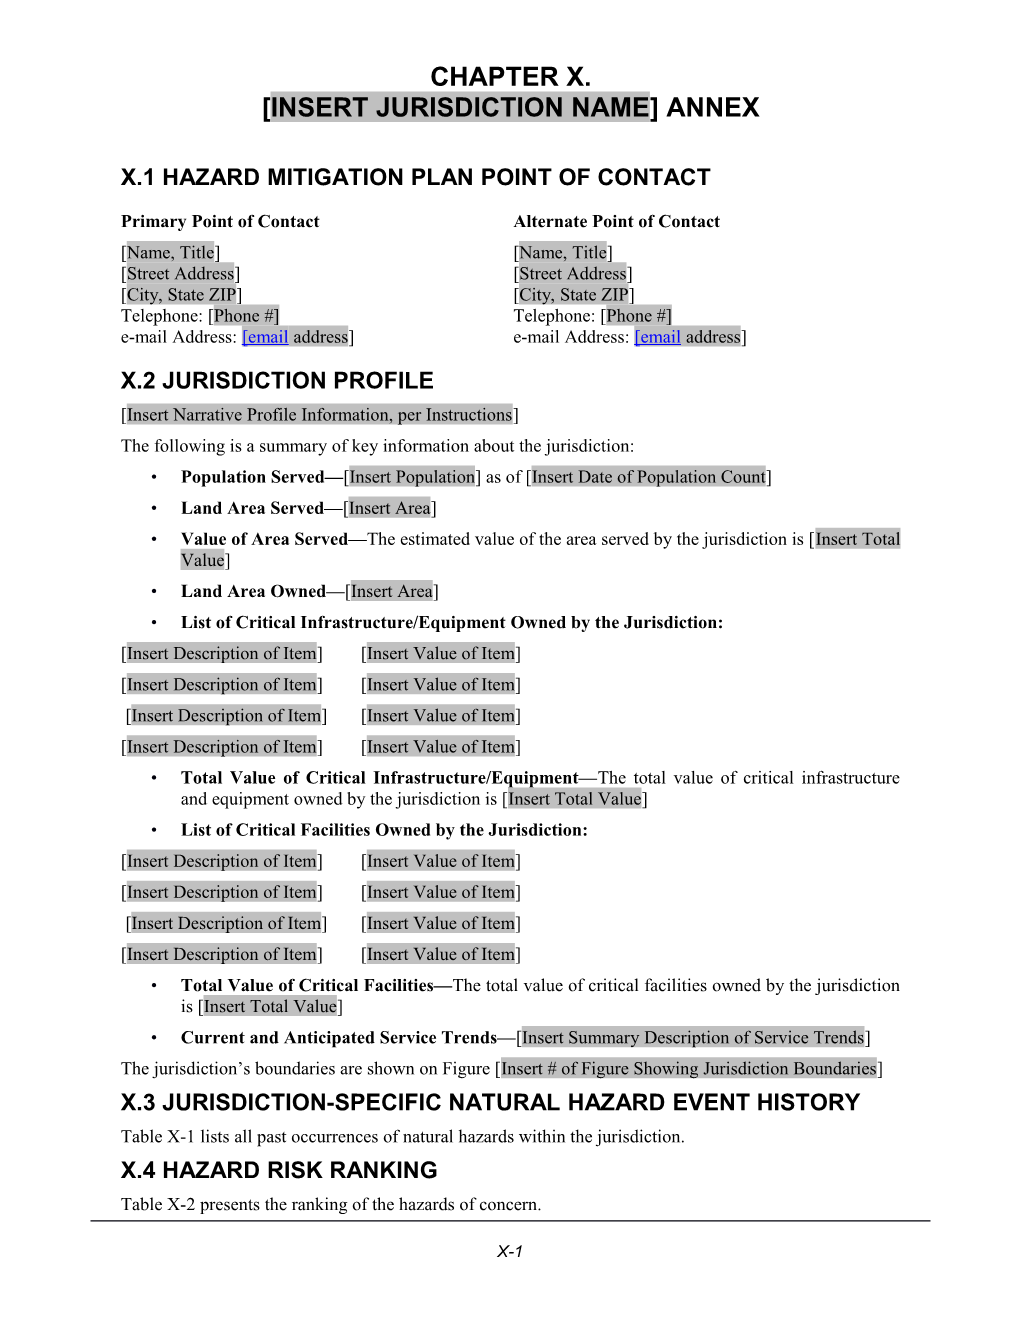 X.1 Hazard Mitigation Plan Point of Contact